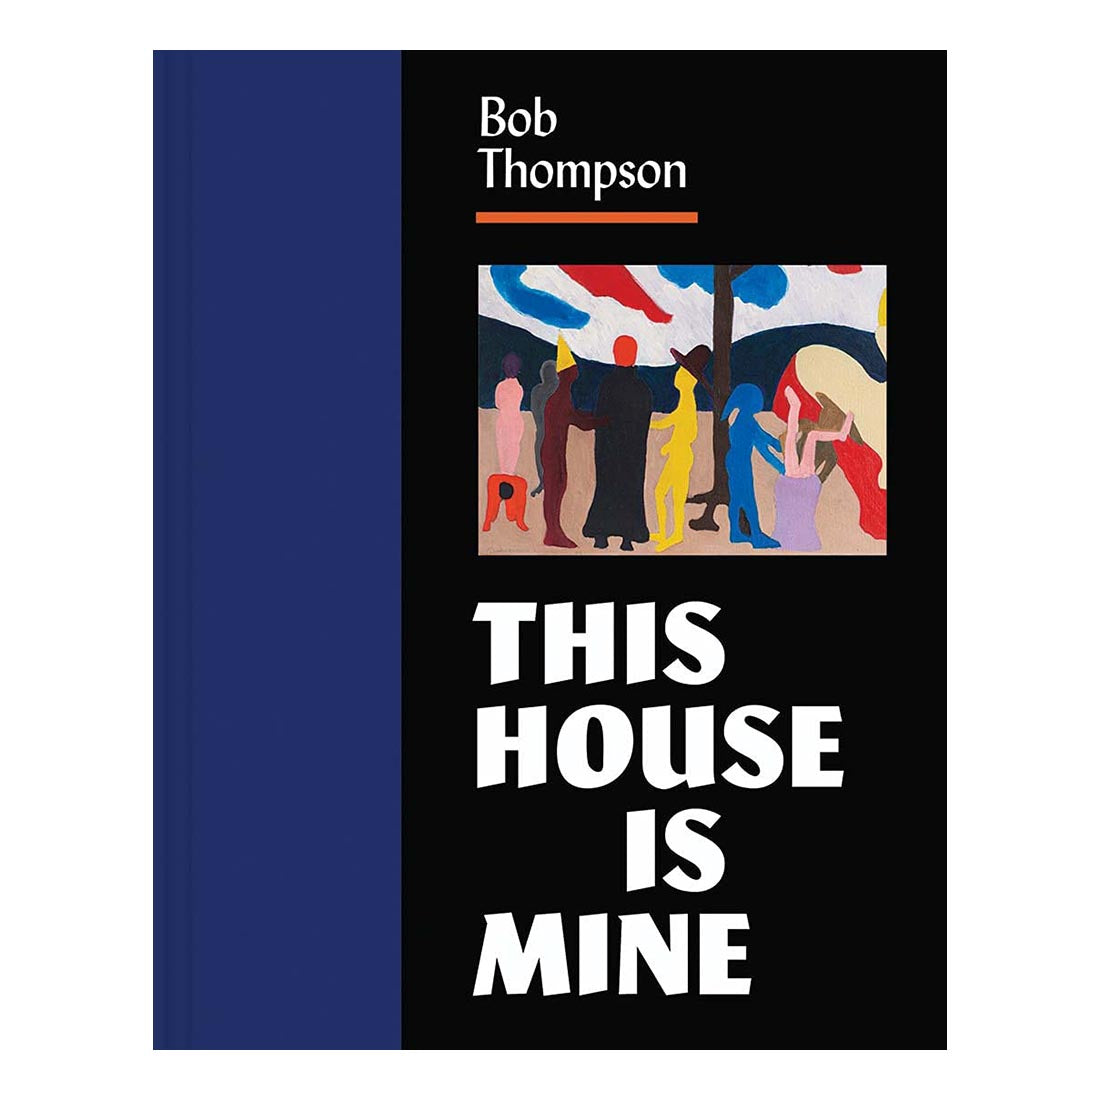 Bob Thompson: This House is Mine